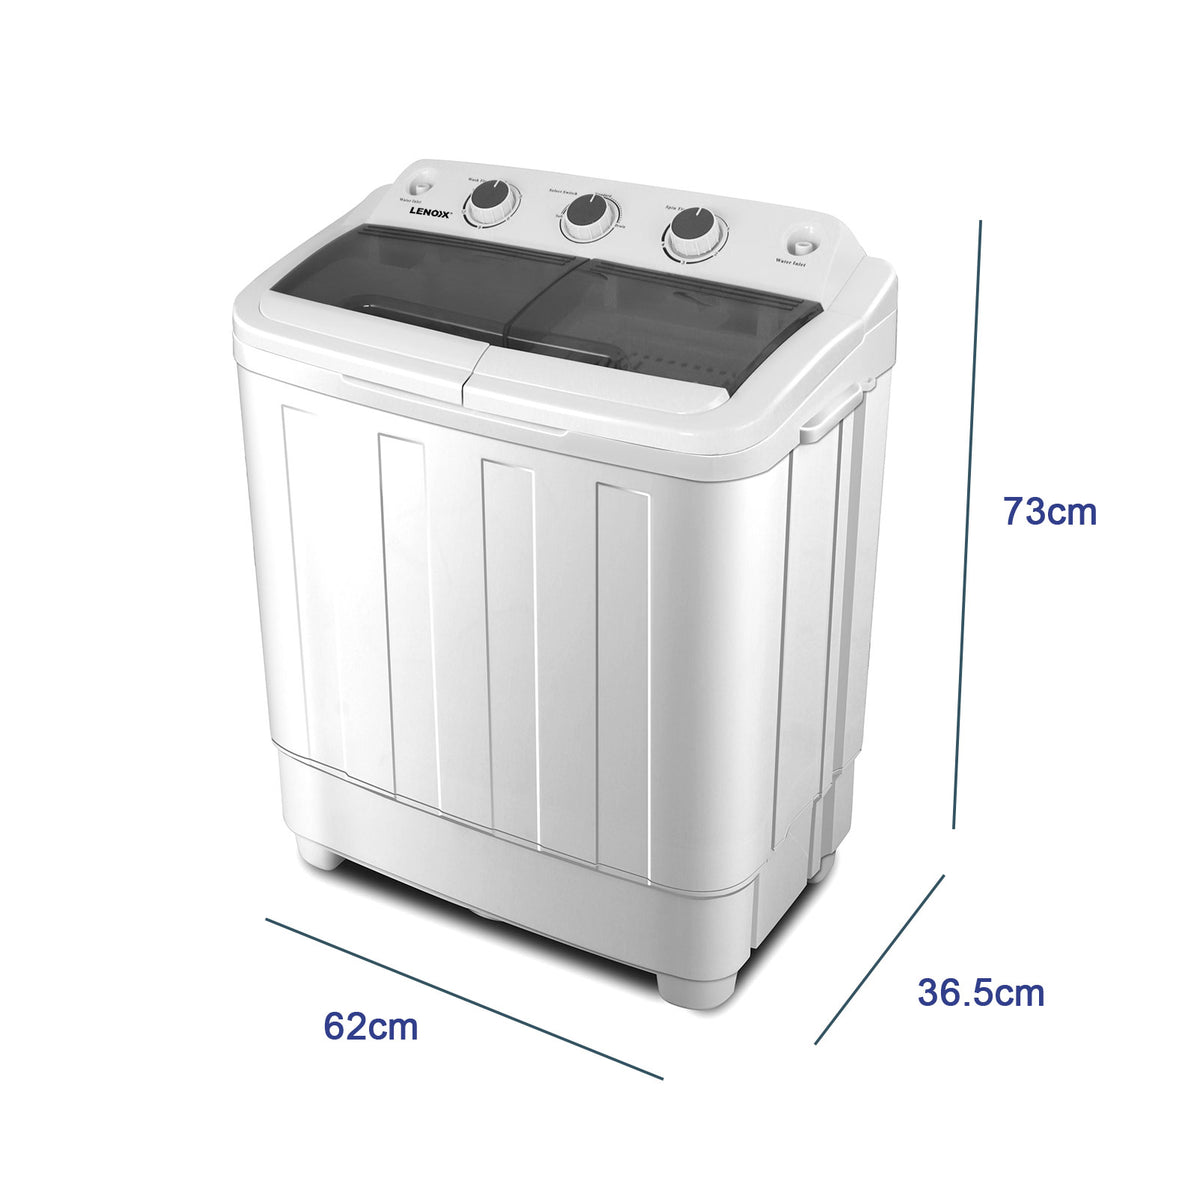 Measurements of the Portable Twin Tub Washing Machine.